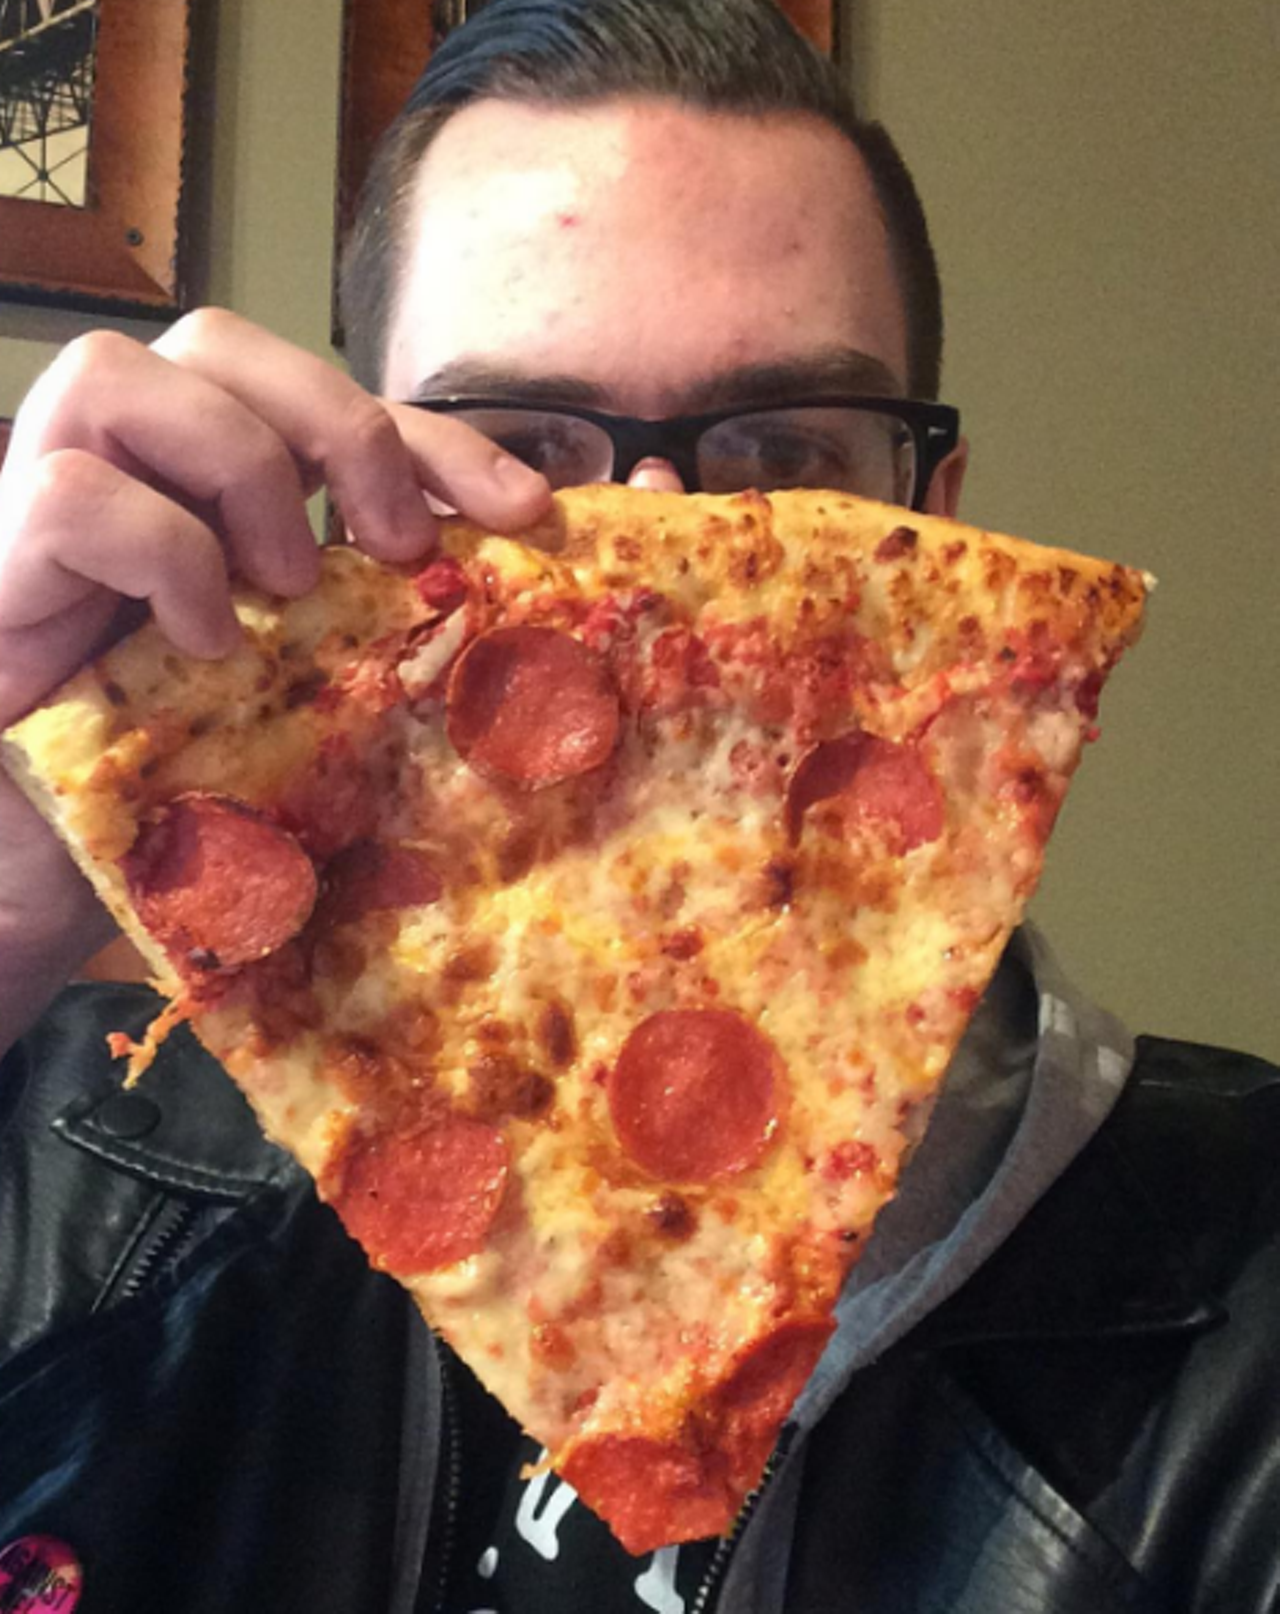 Detroit Pizza Company
Photo via @disneymike313